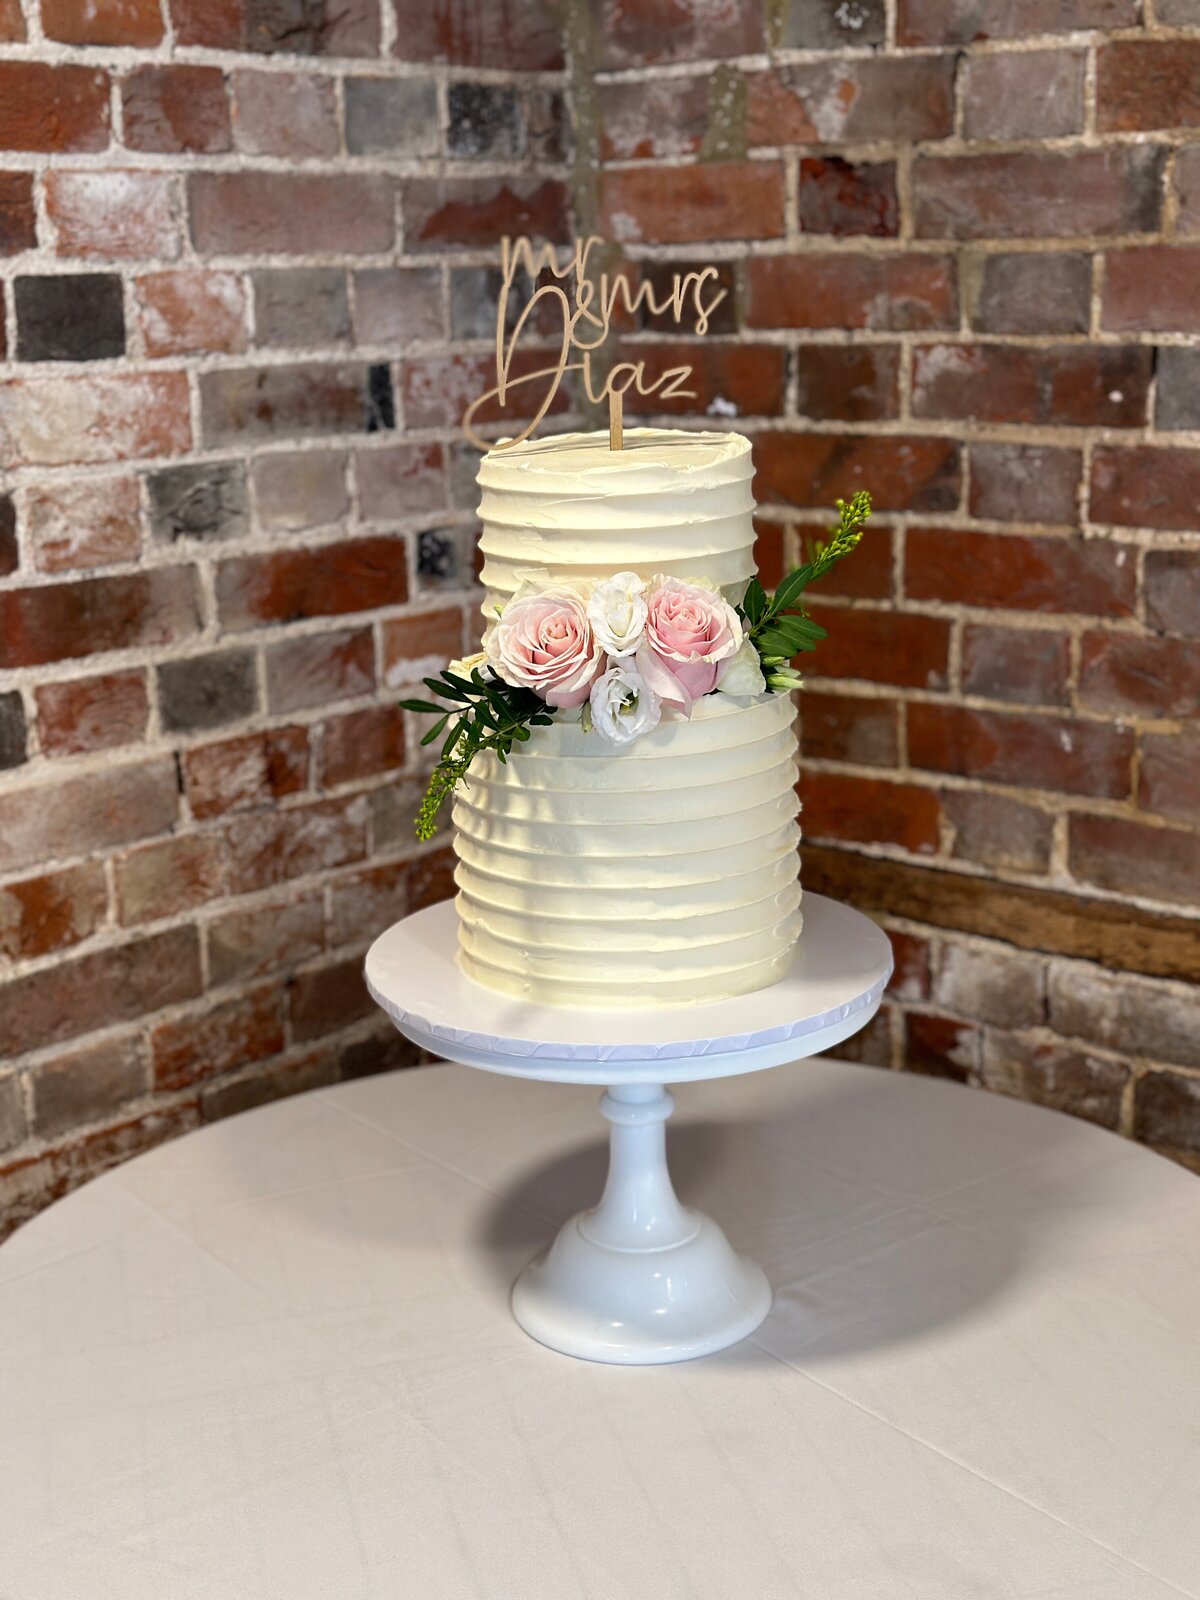 layers-graces-buttercream-wedding-cake-gaynes-park-fresh-flowers